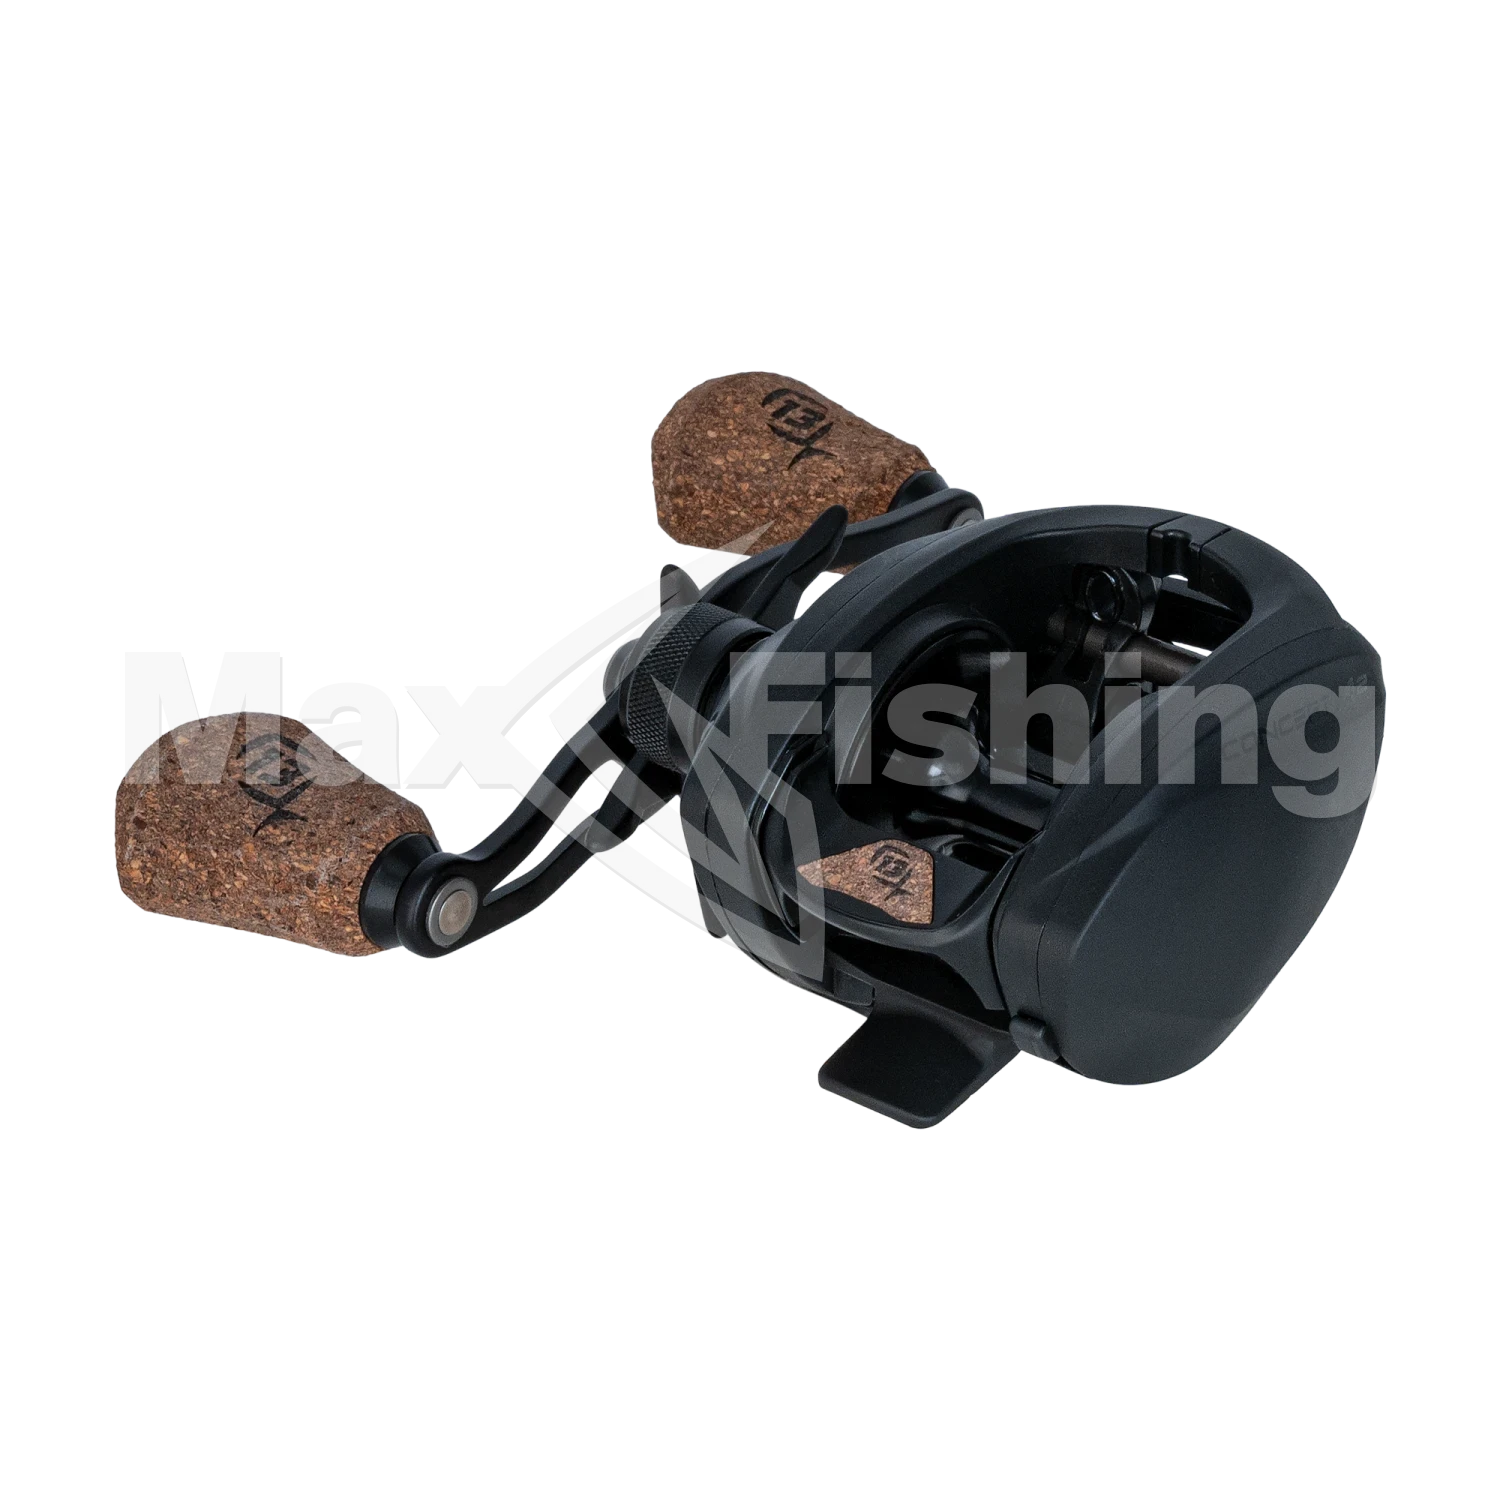 Катушка мультипликаторная 13 Fishing Concept A2 Casting Reel 5.6-LH